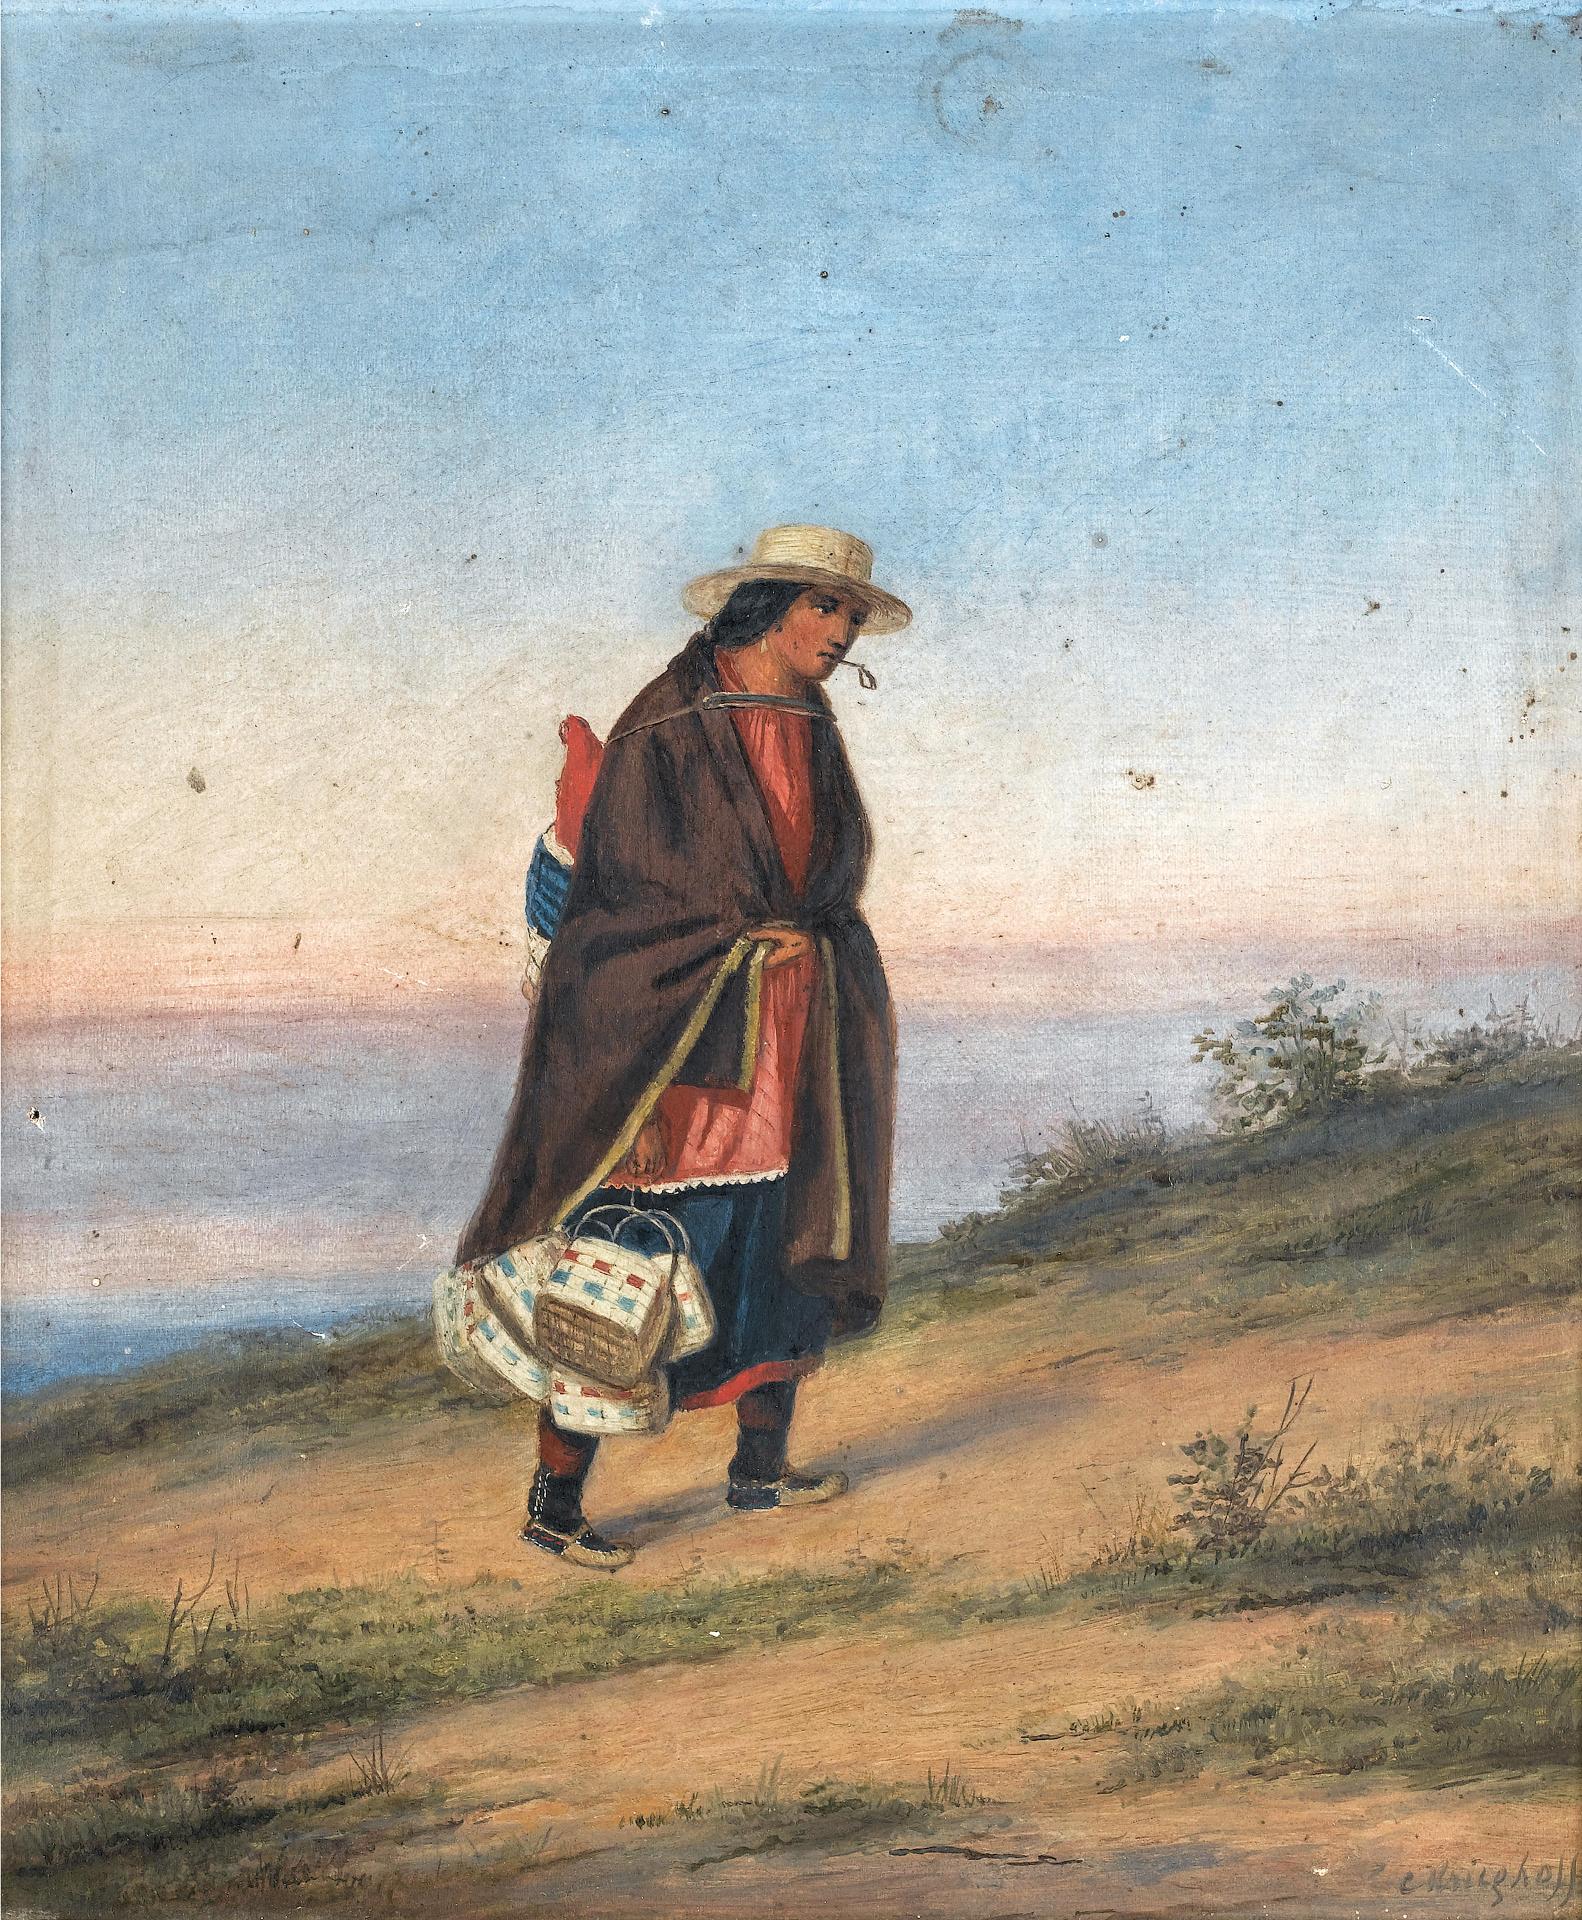 Cornelius David Krieghoff (1815-1872) - The basket seller